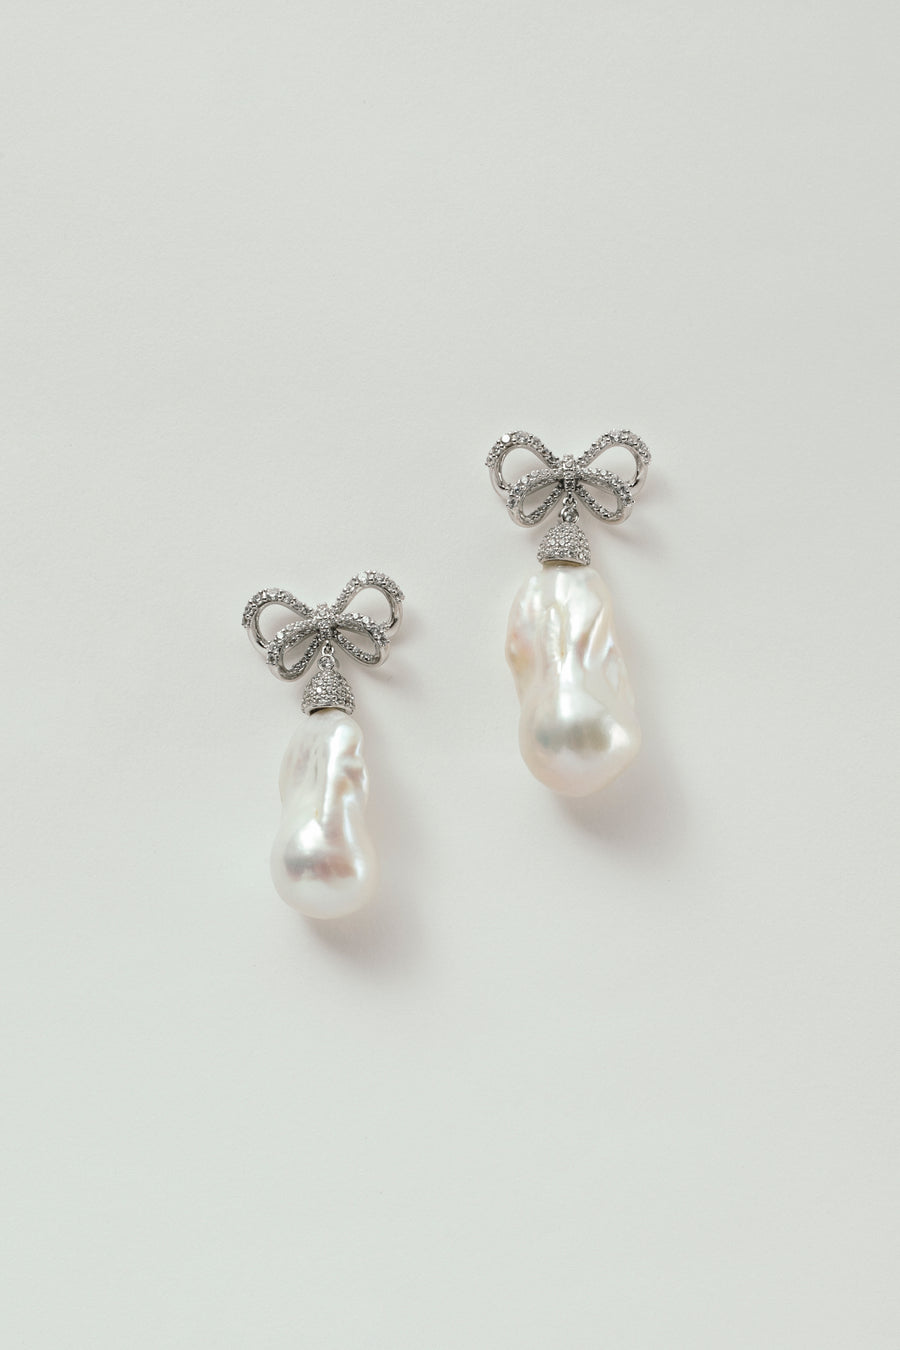 Barbara Pearl Earrings